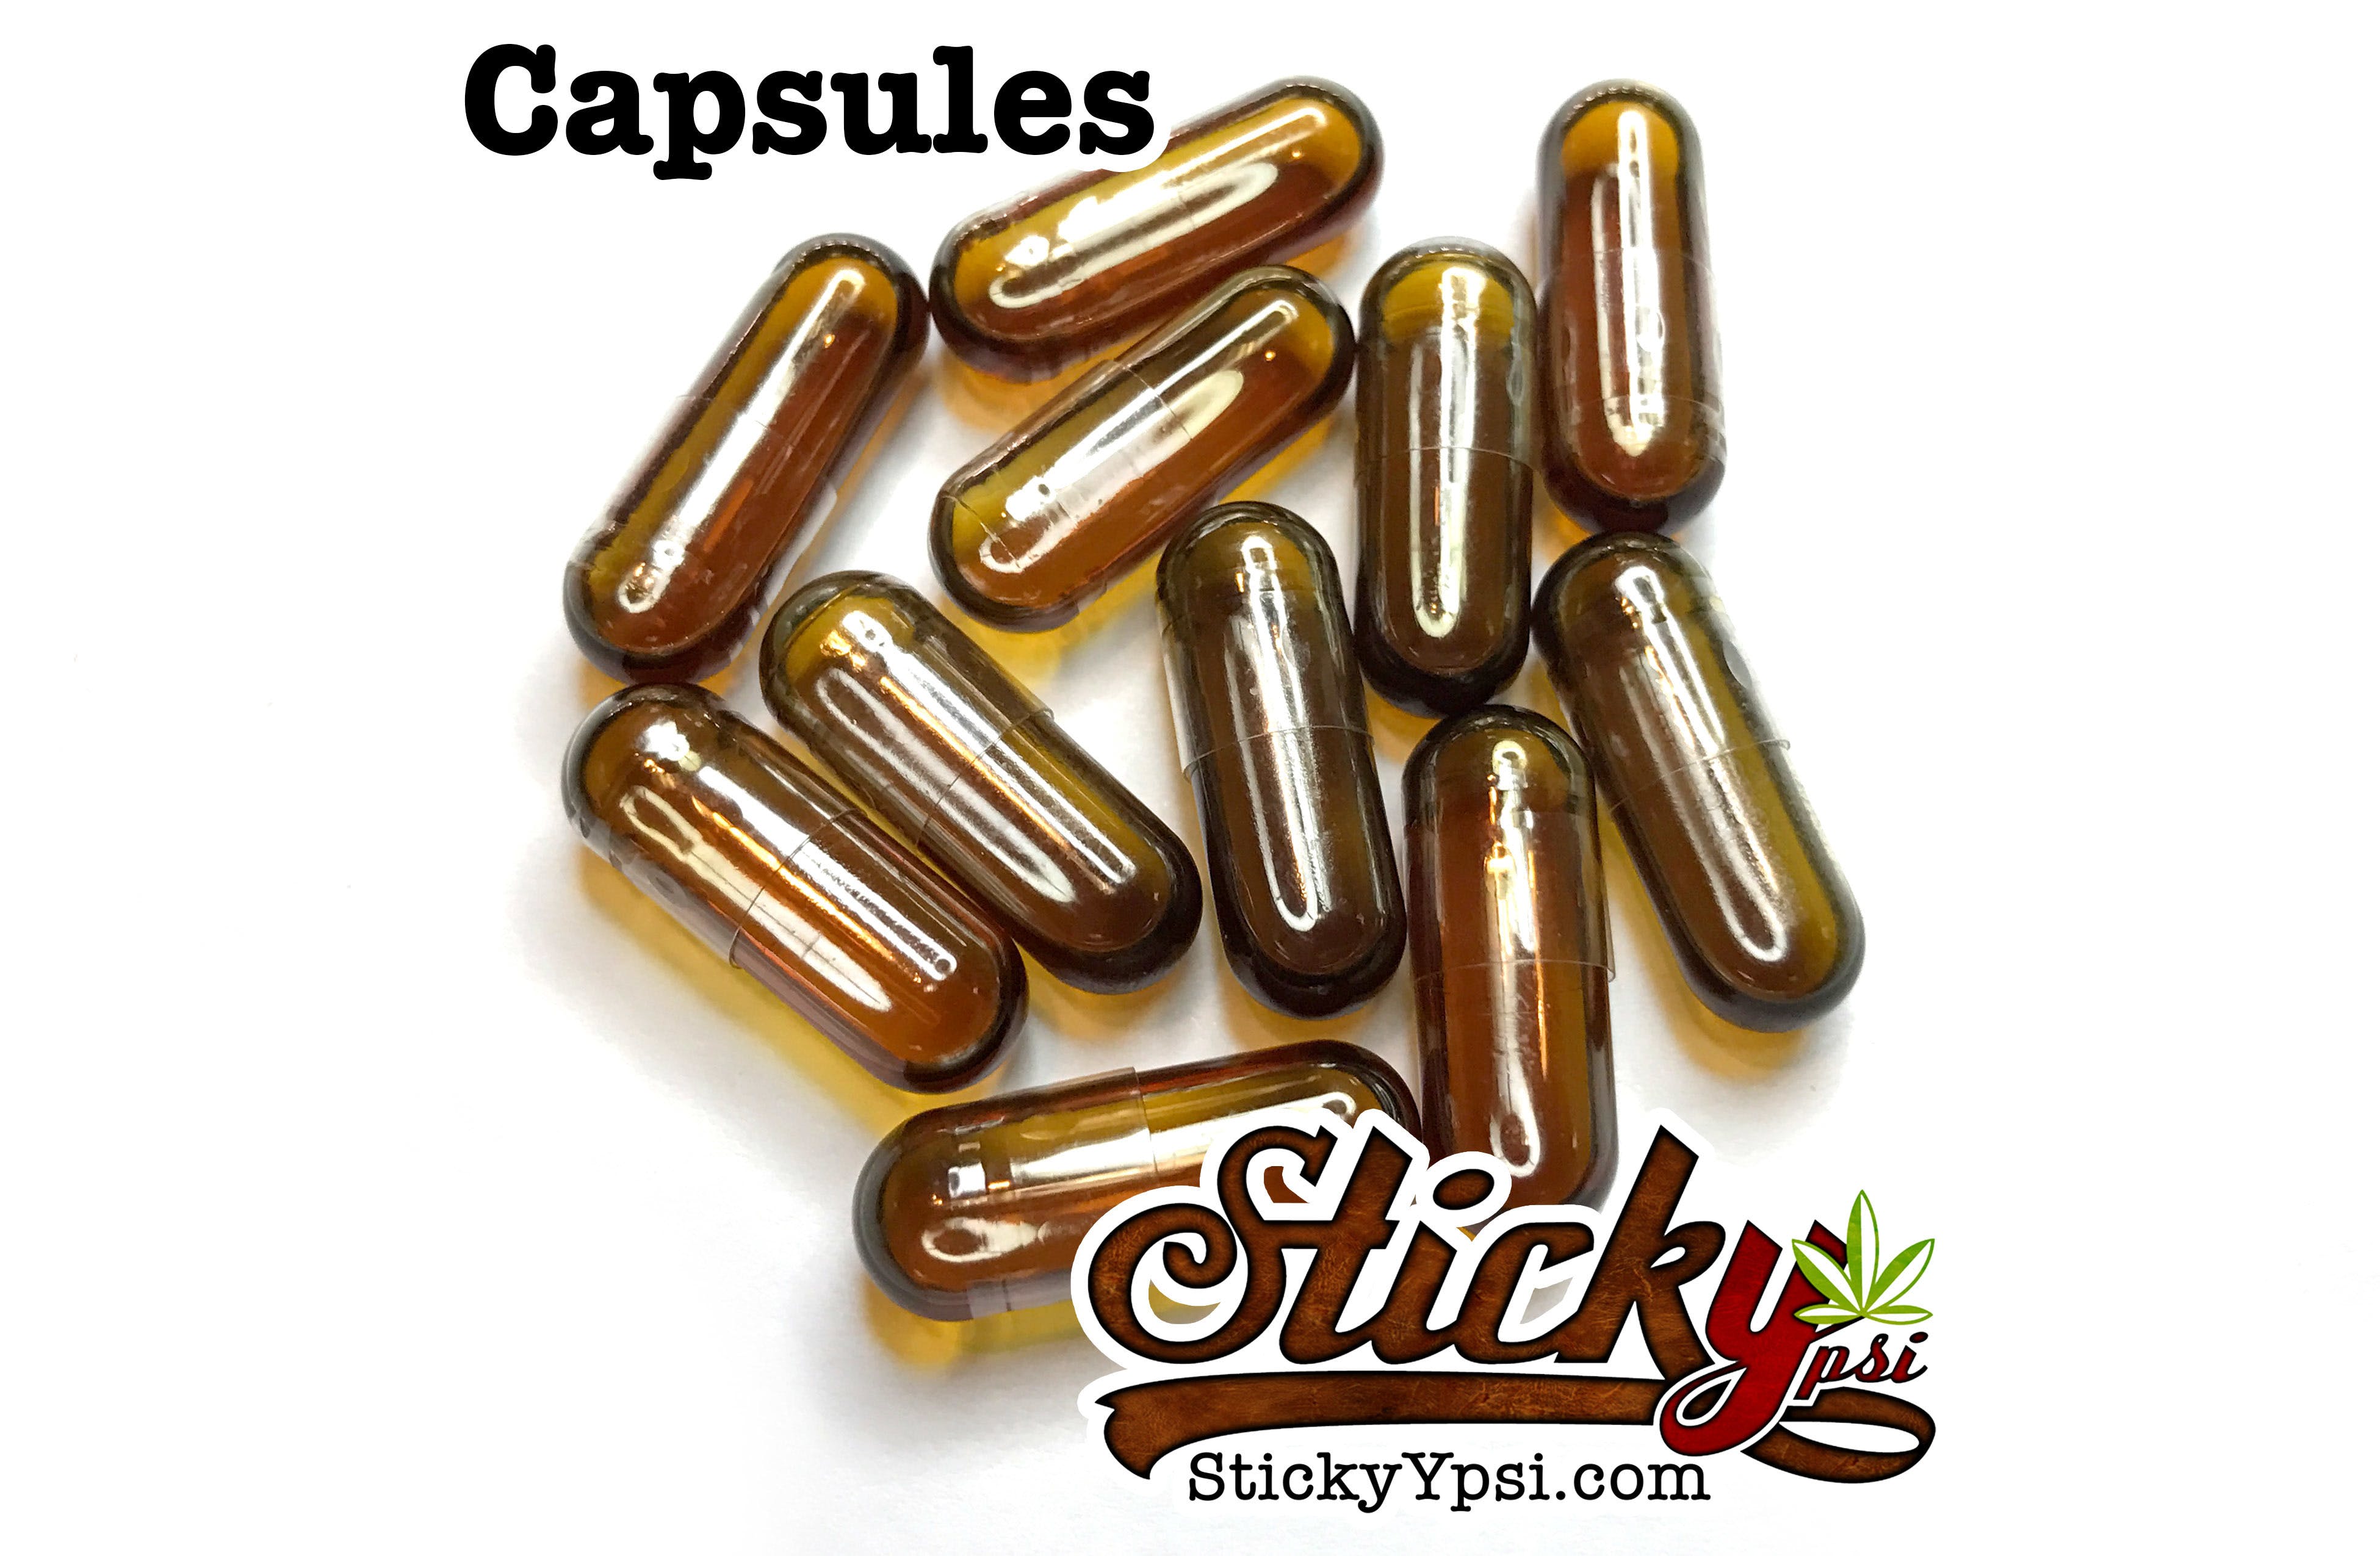 edible-galactic-meds-capsules-130-thccbd-30-pk